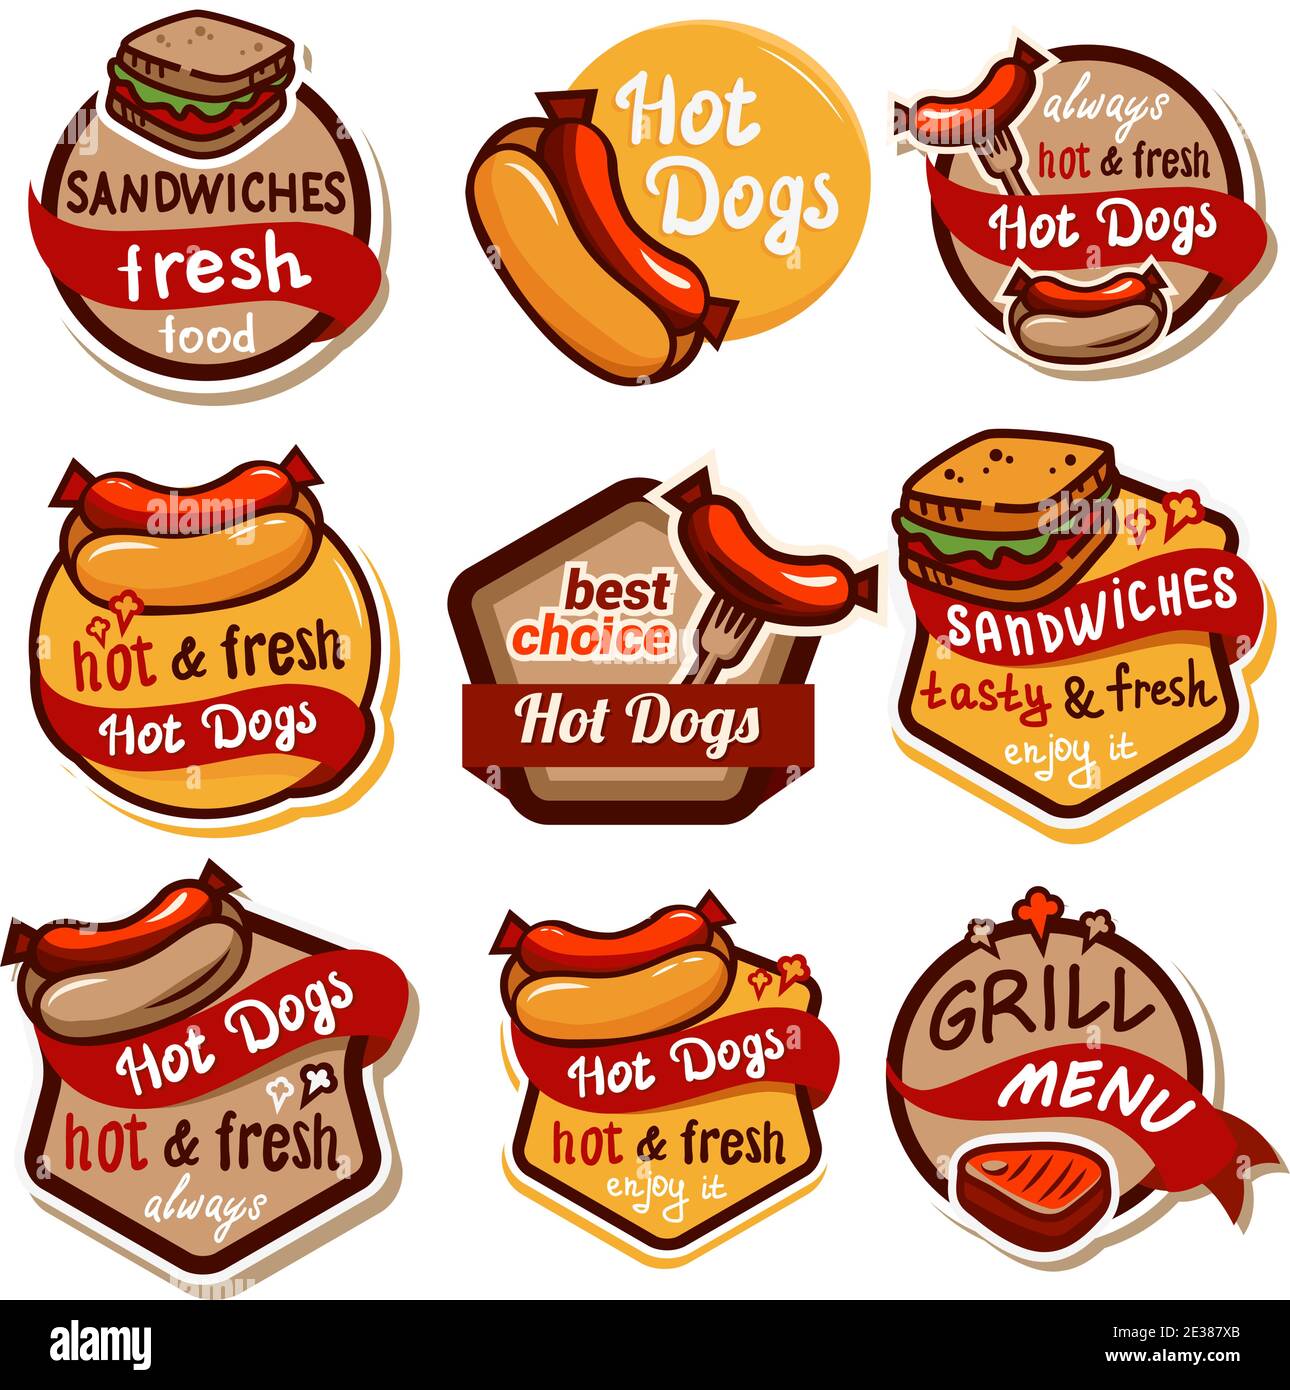 Hotdog sandwich emblem design set. Isolated vector illustration Stock Vector